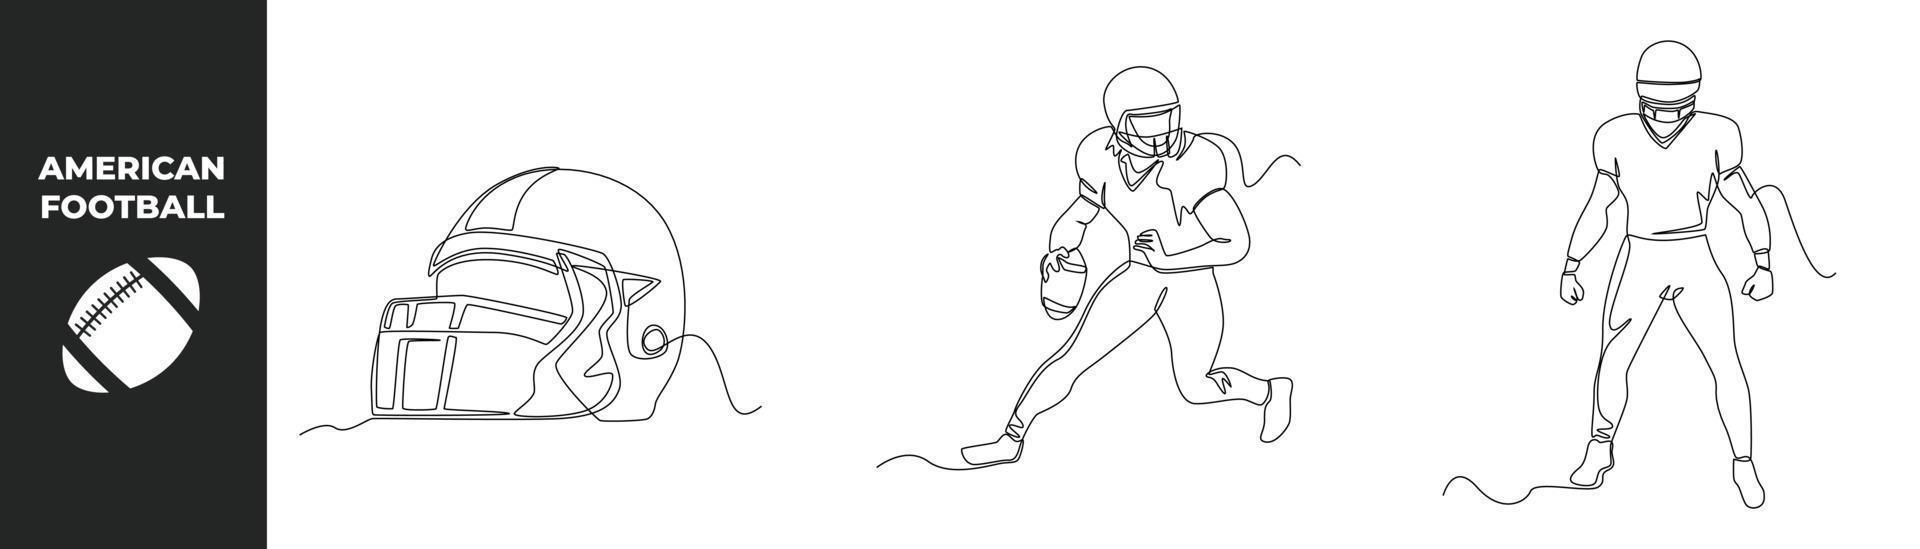 concepto continuo de juego de fútbol americano de dibujo de una línea. casco de fútbol americano y deportista de fútbol americano. gráfico vectorial de diseño de dibujo de una sola línea. vector